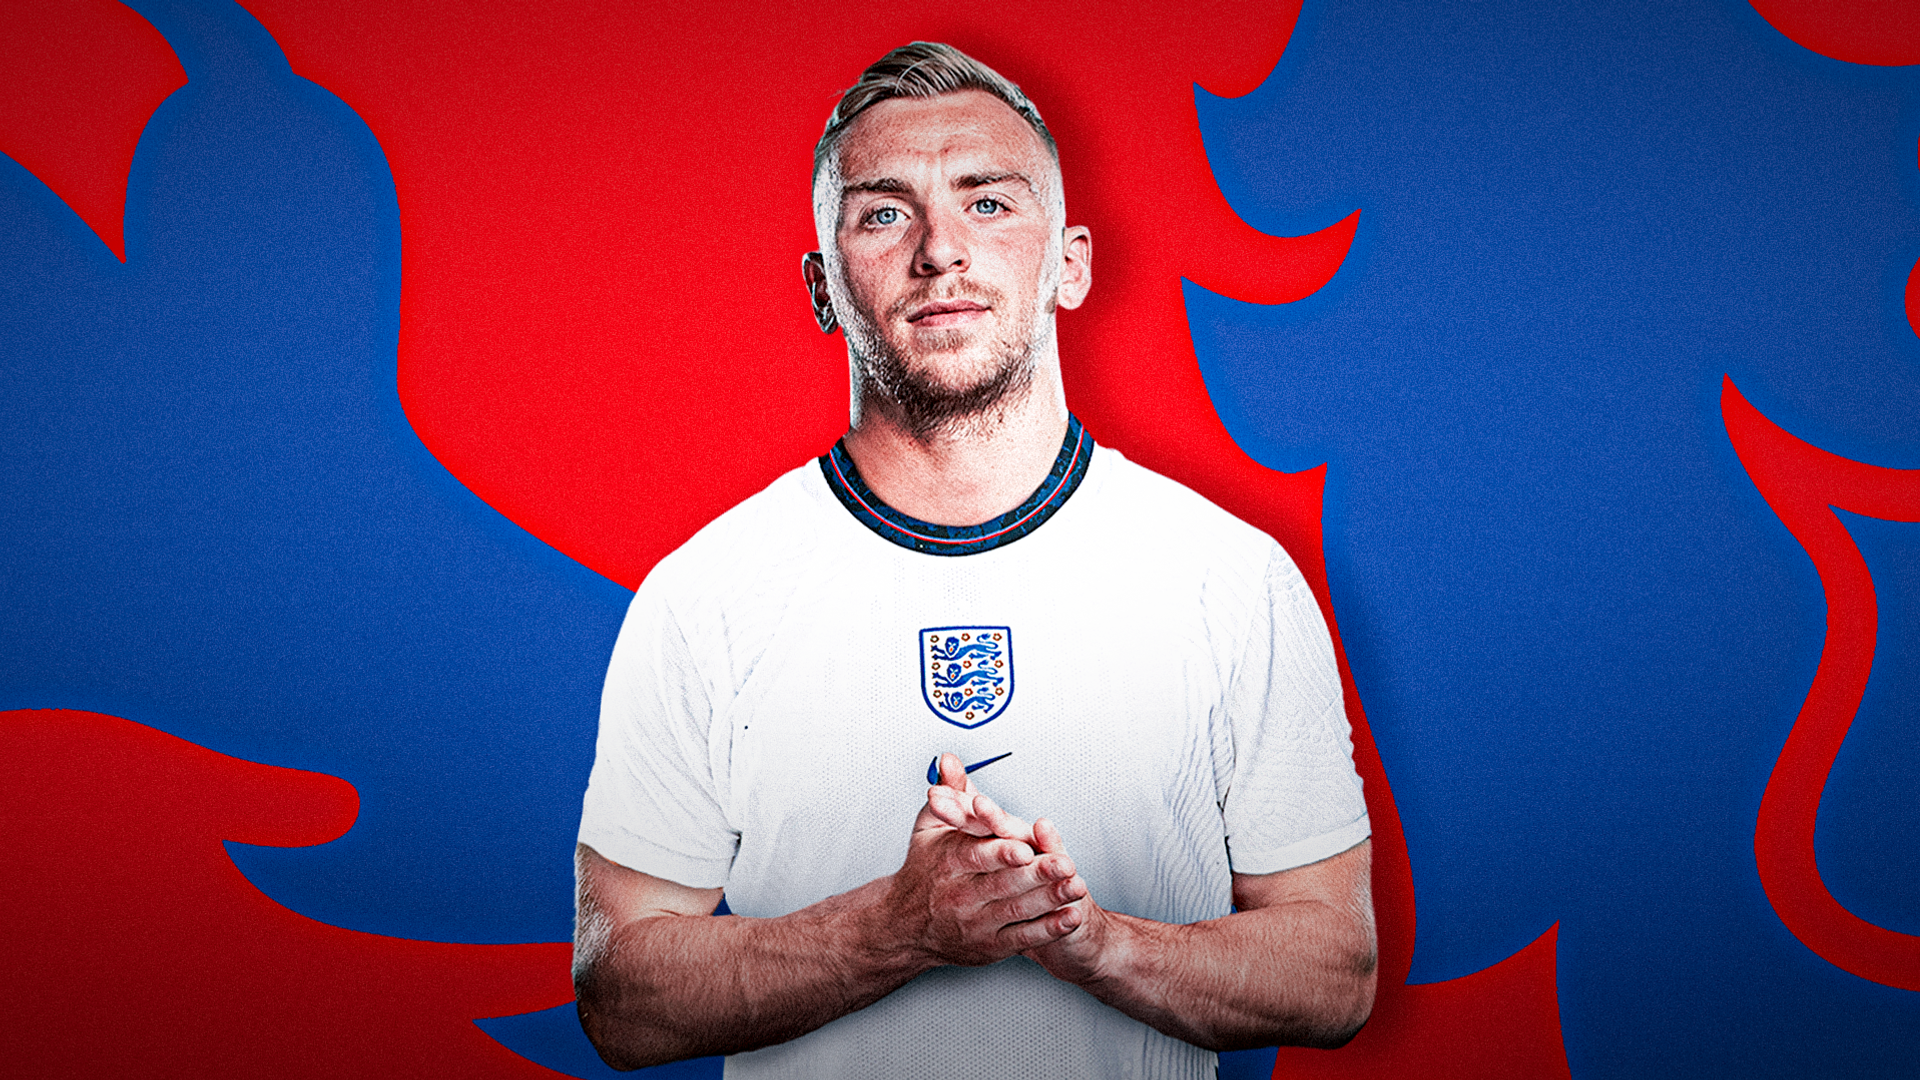 Bowen to make England debut vs Hungary - tell us your starting XI